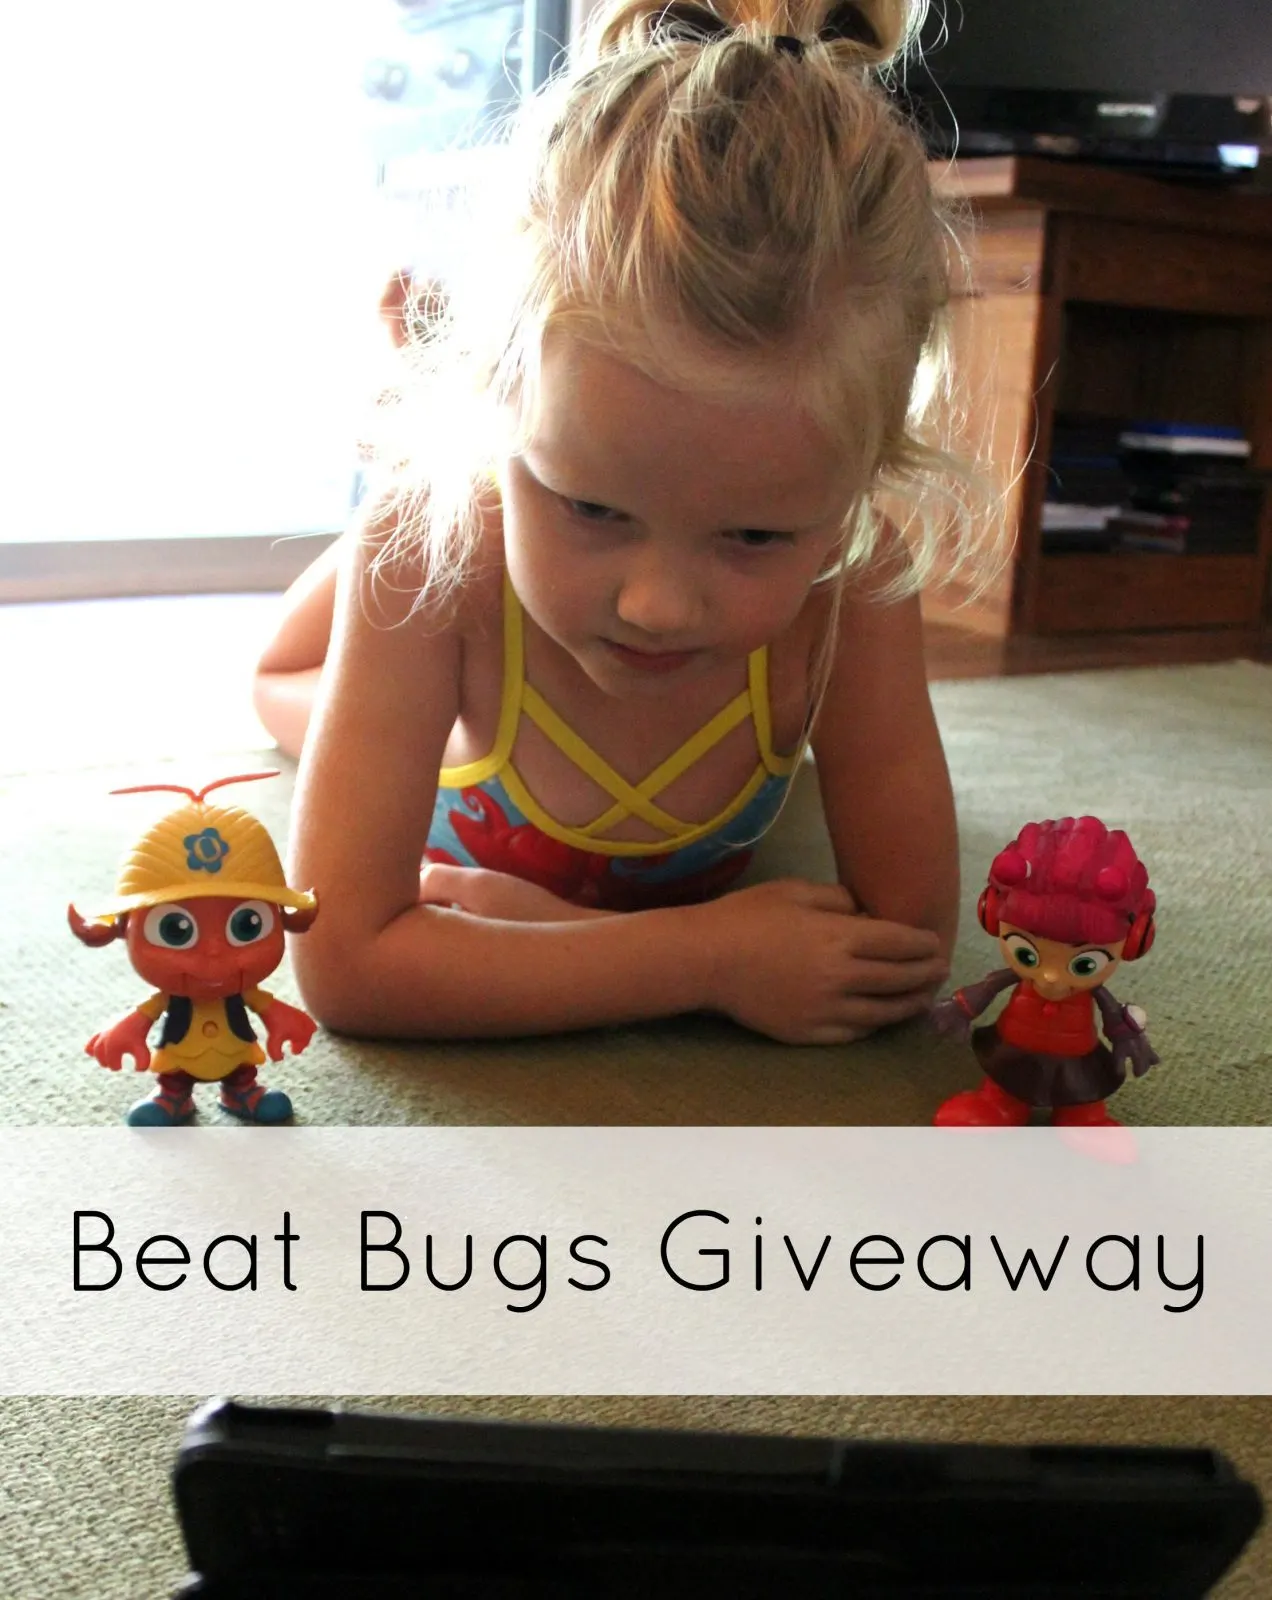 beat bugs giveaway pinterest image